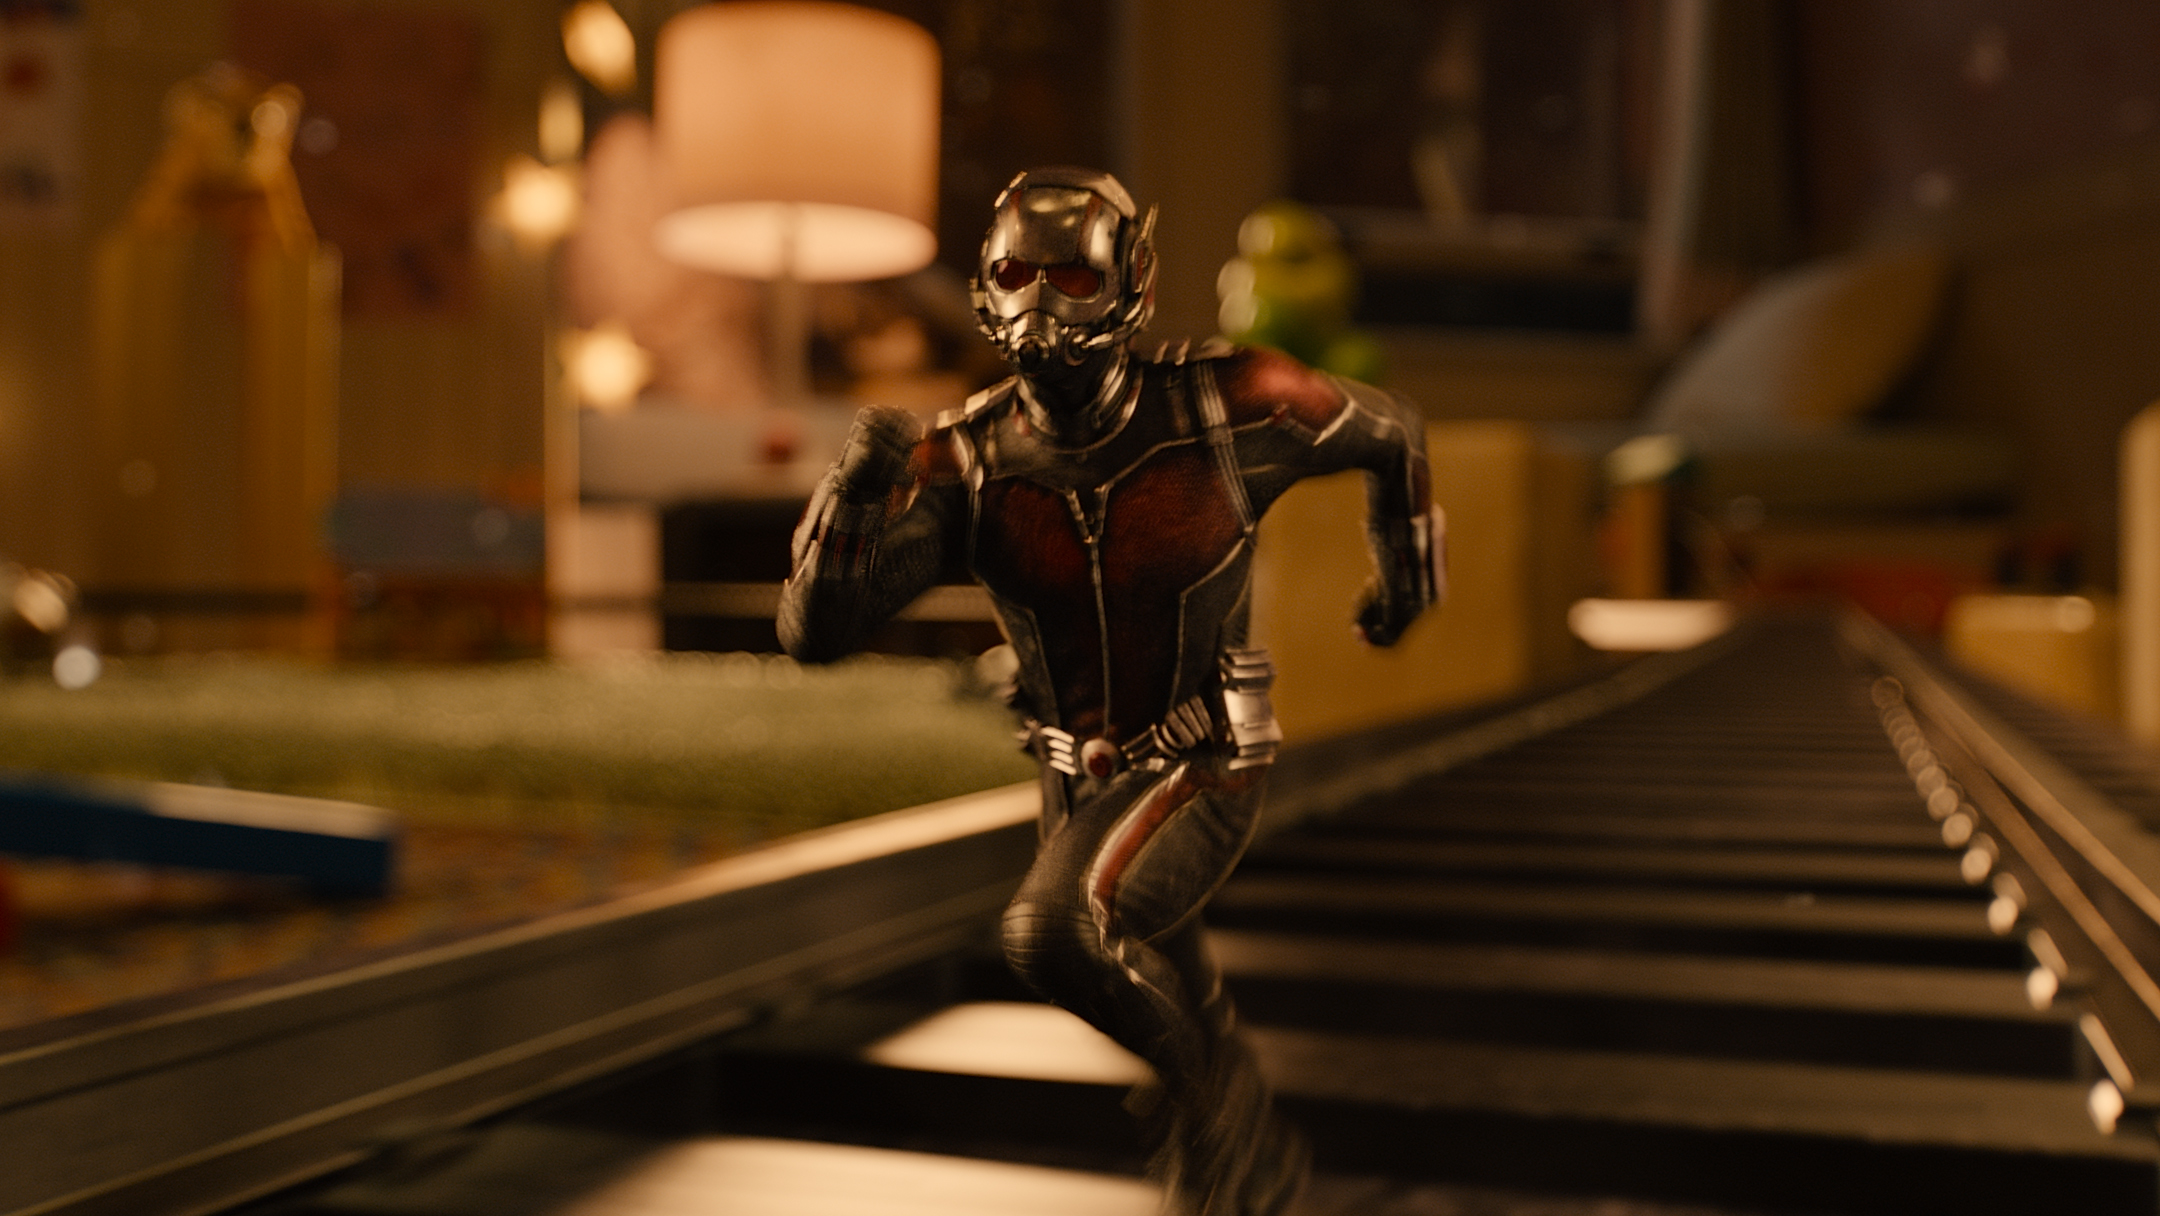 Descarga gratuita de fondo de pantalla para móvil de Películas, Ant Man.